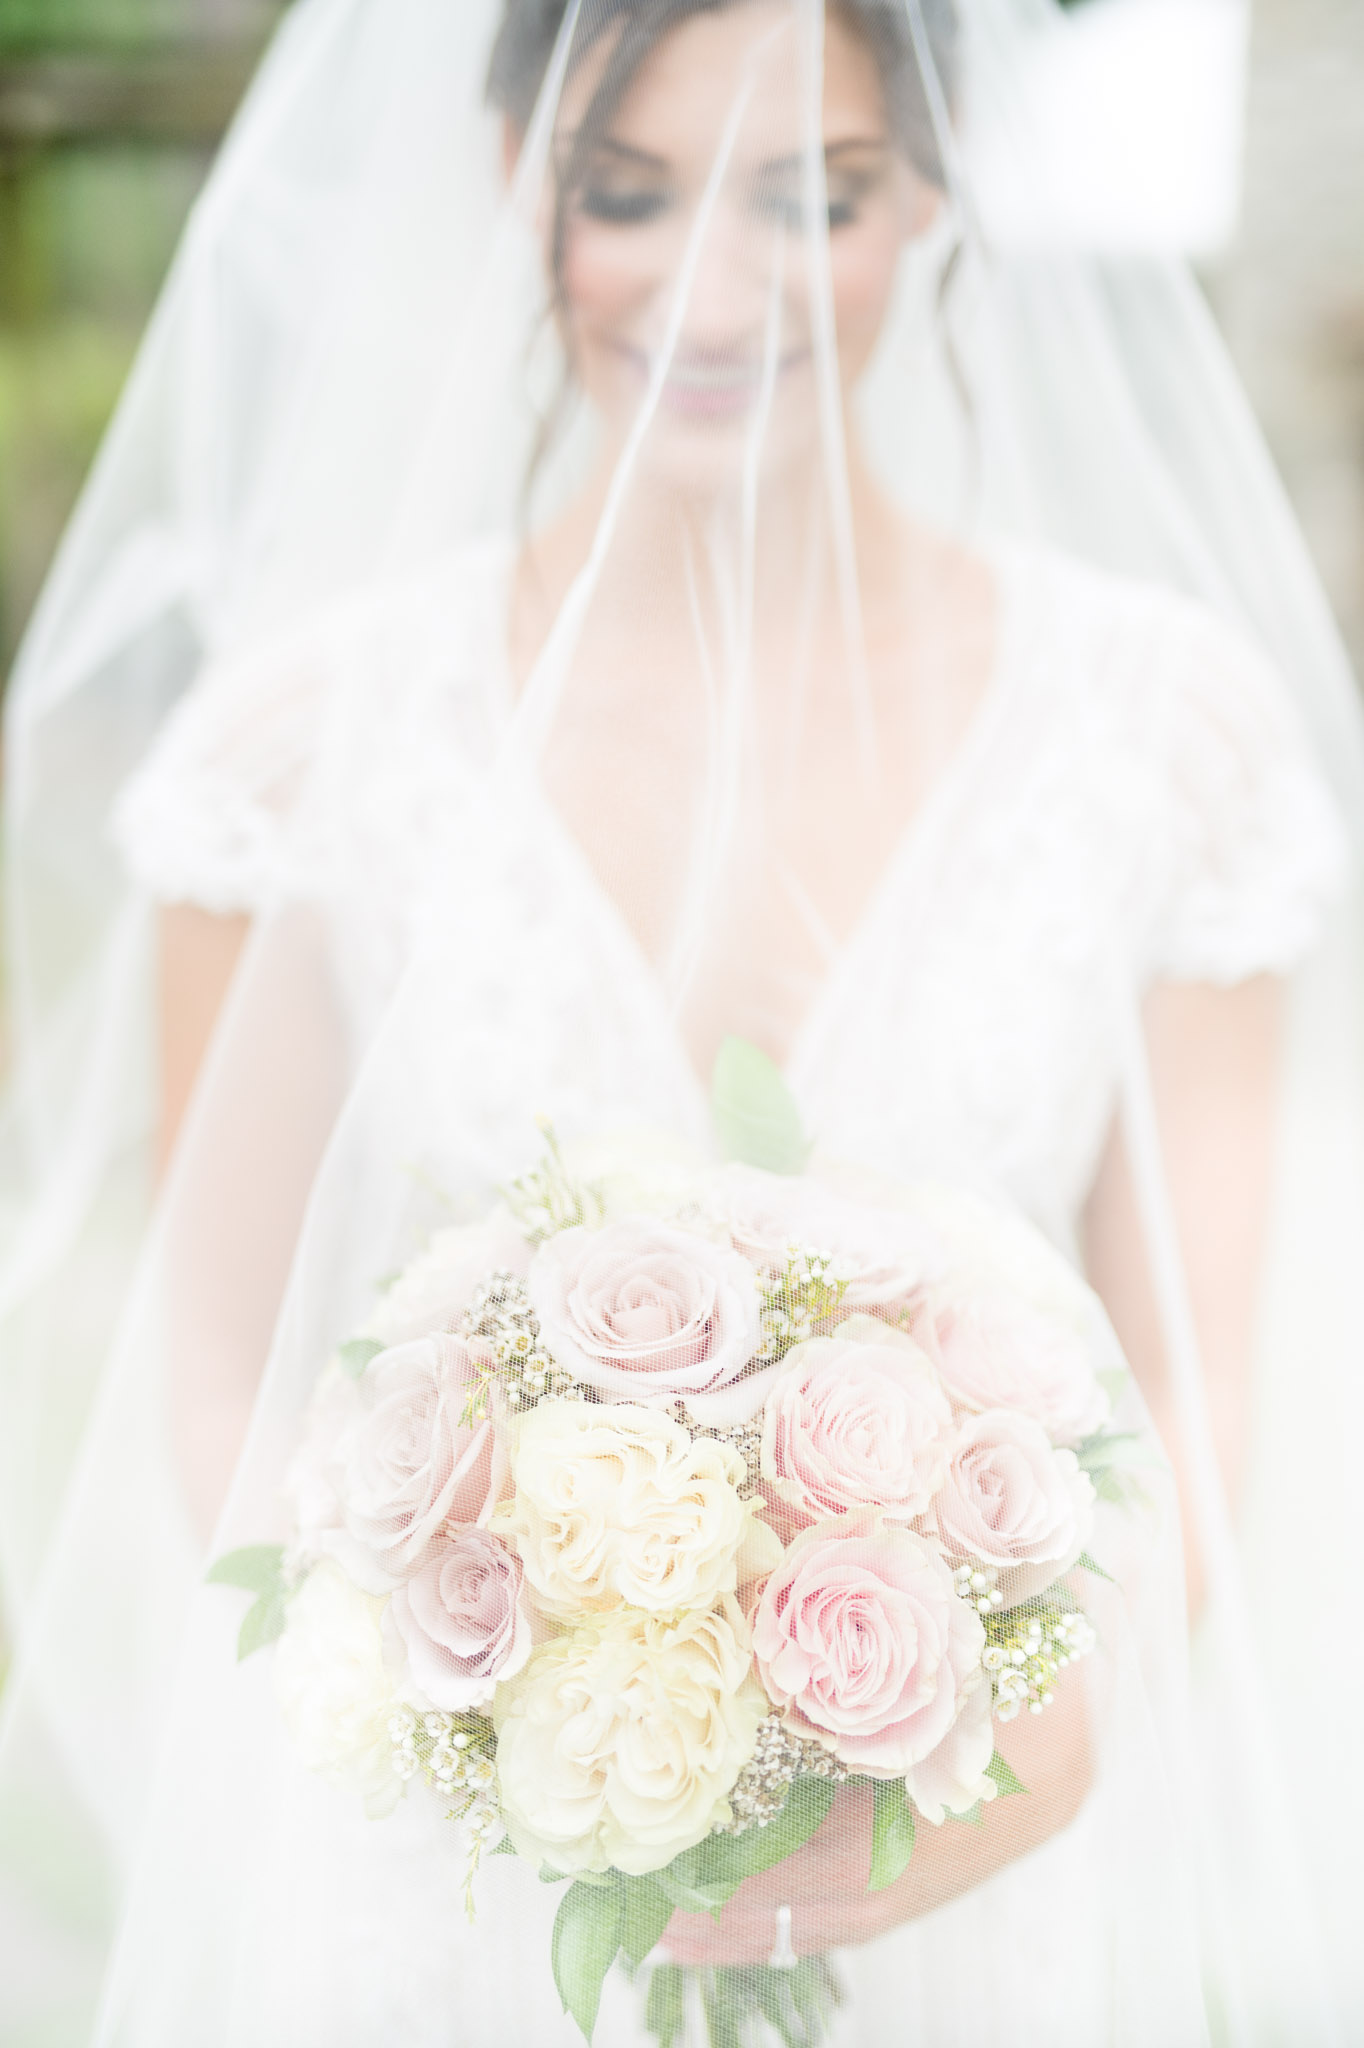 Bride holds bouquet under veil.